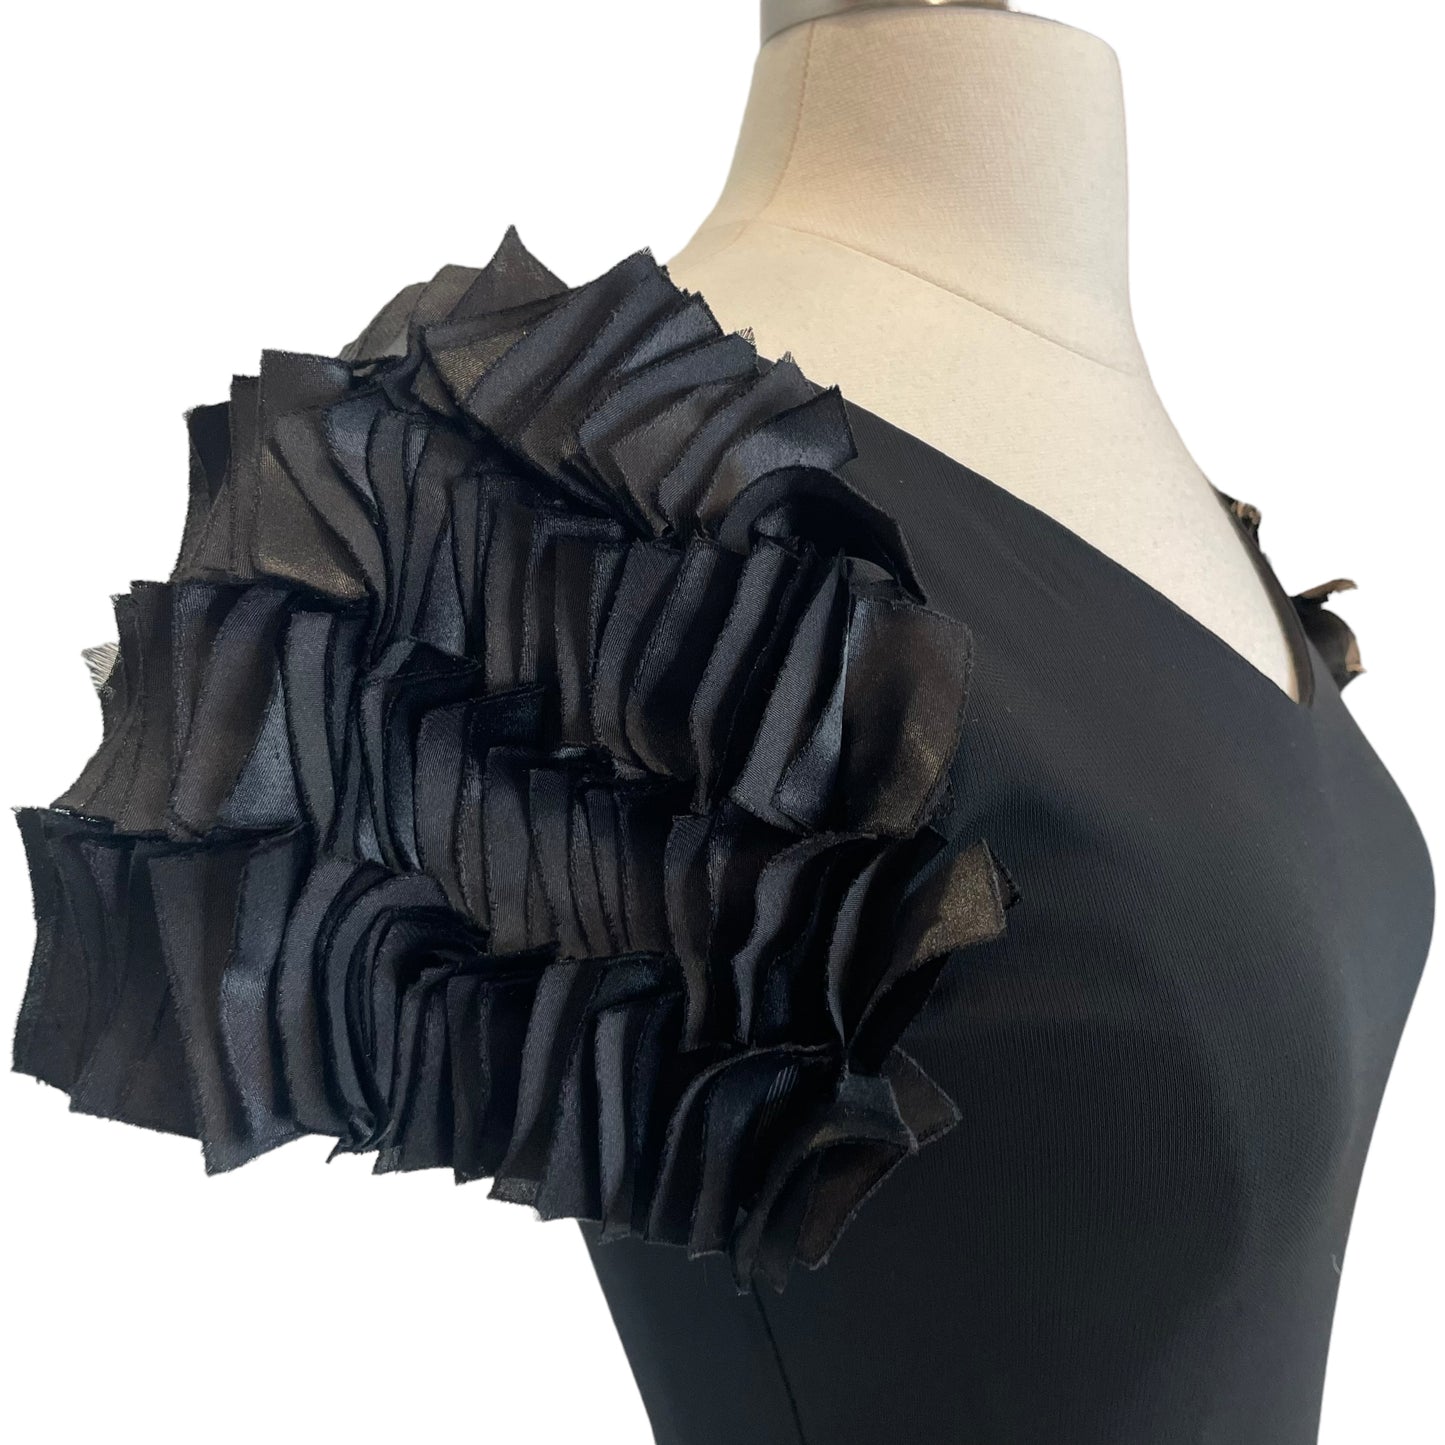 Black Ruffle Sleeve Dress - M